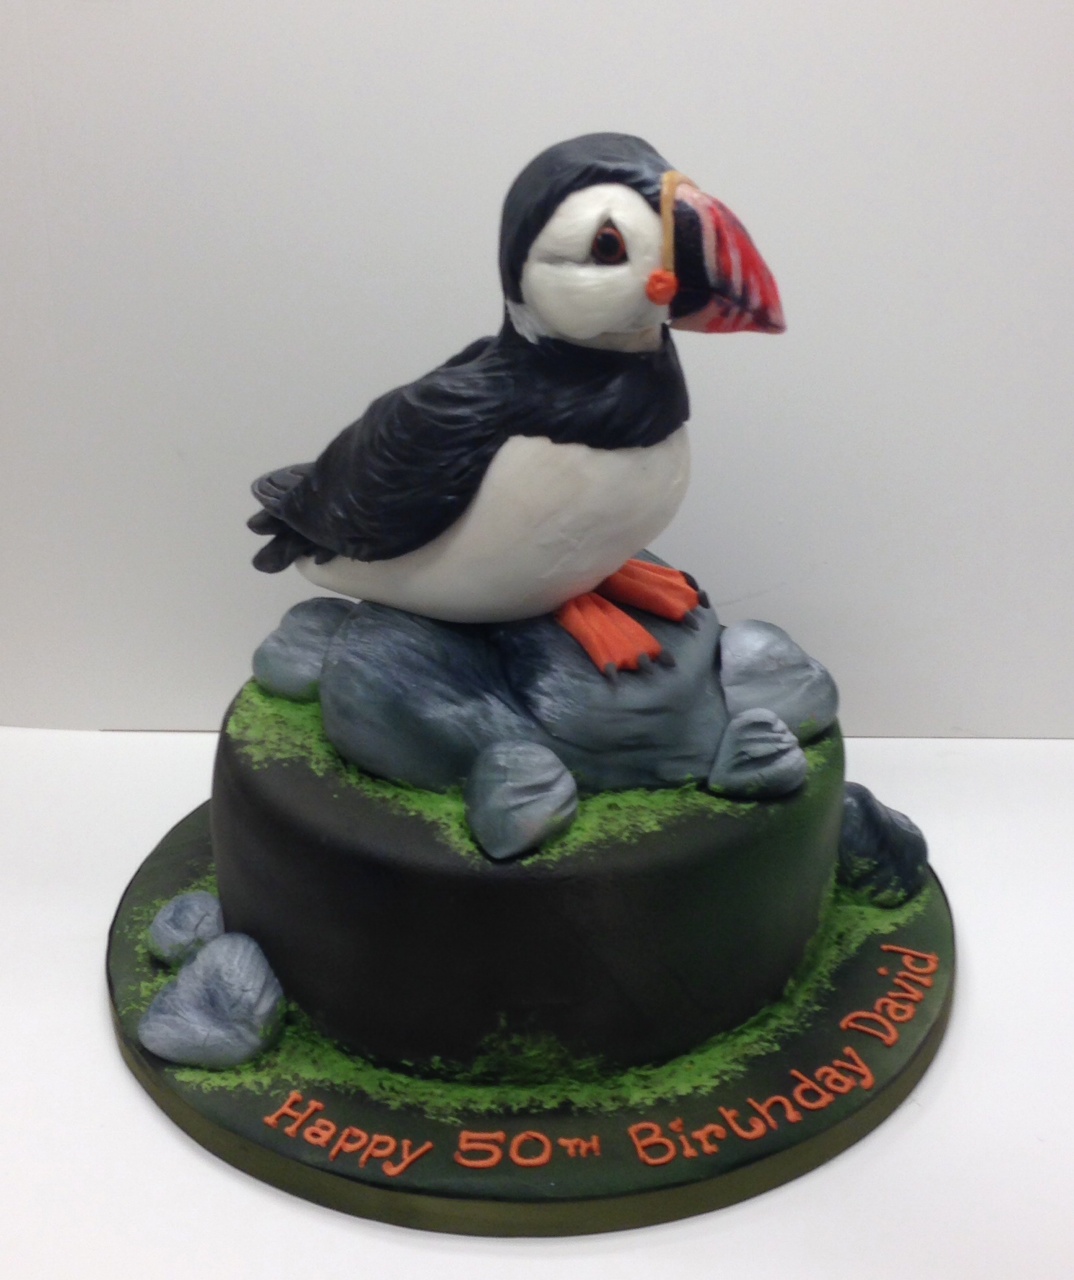 Animal birthday cakes - Cakes by Robin